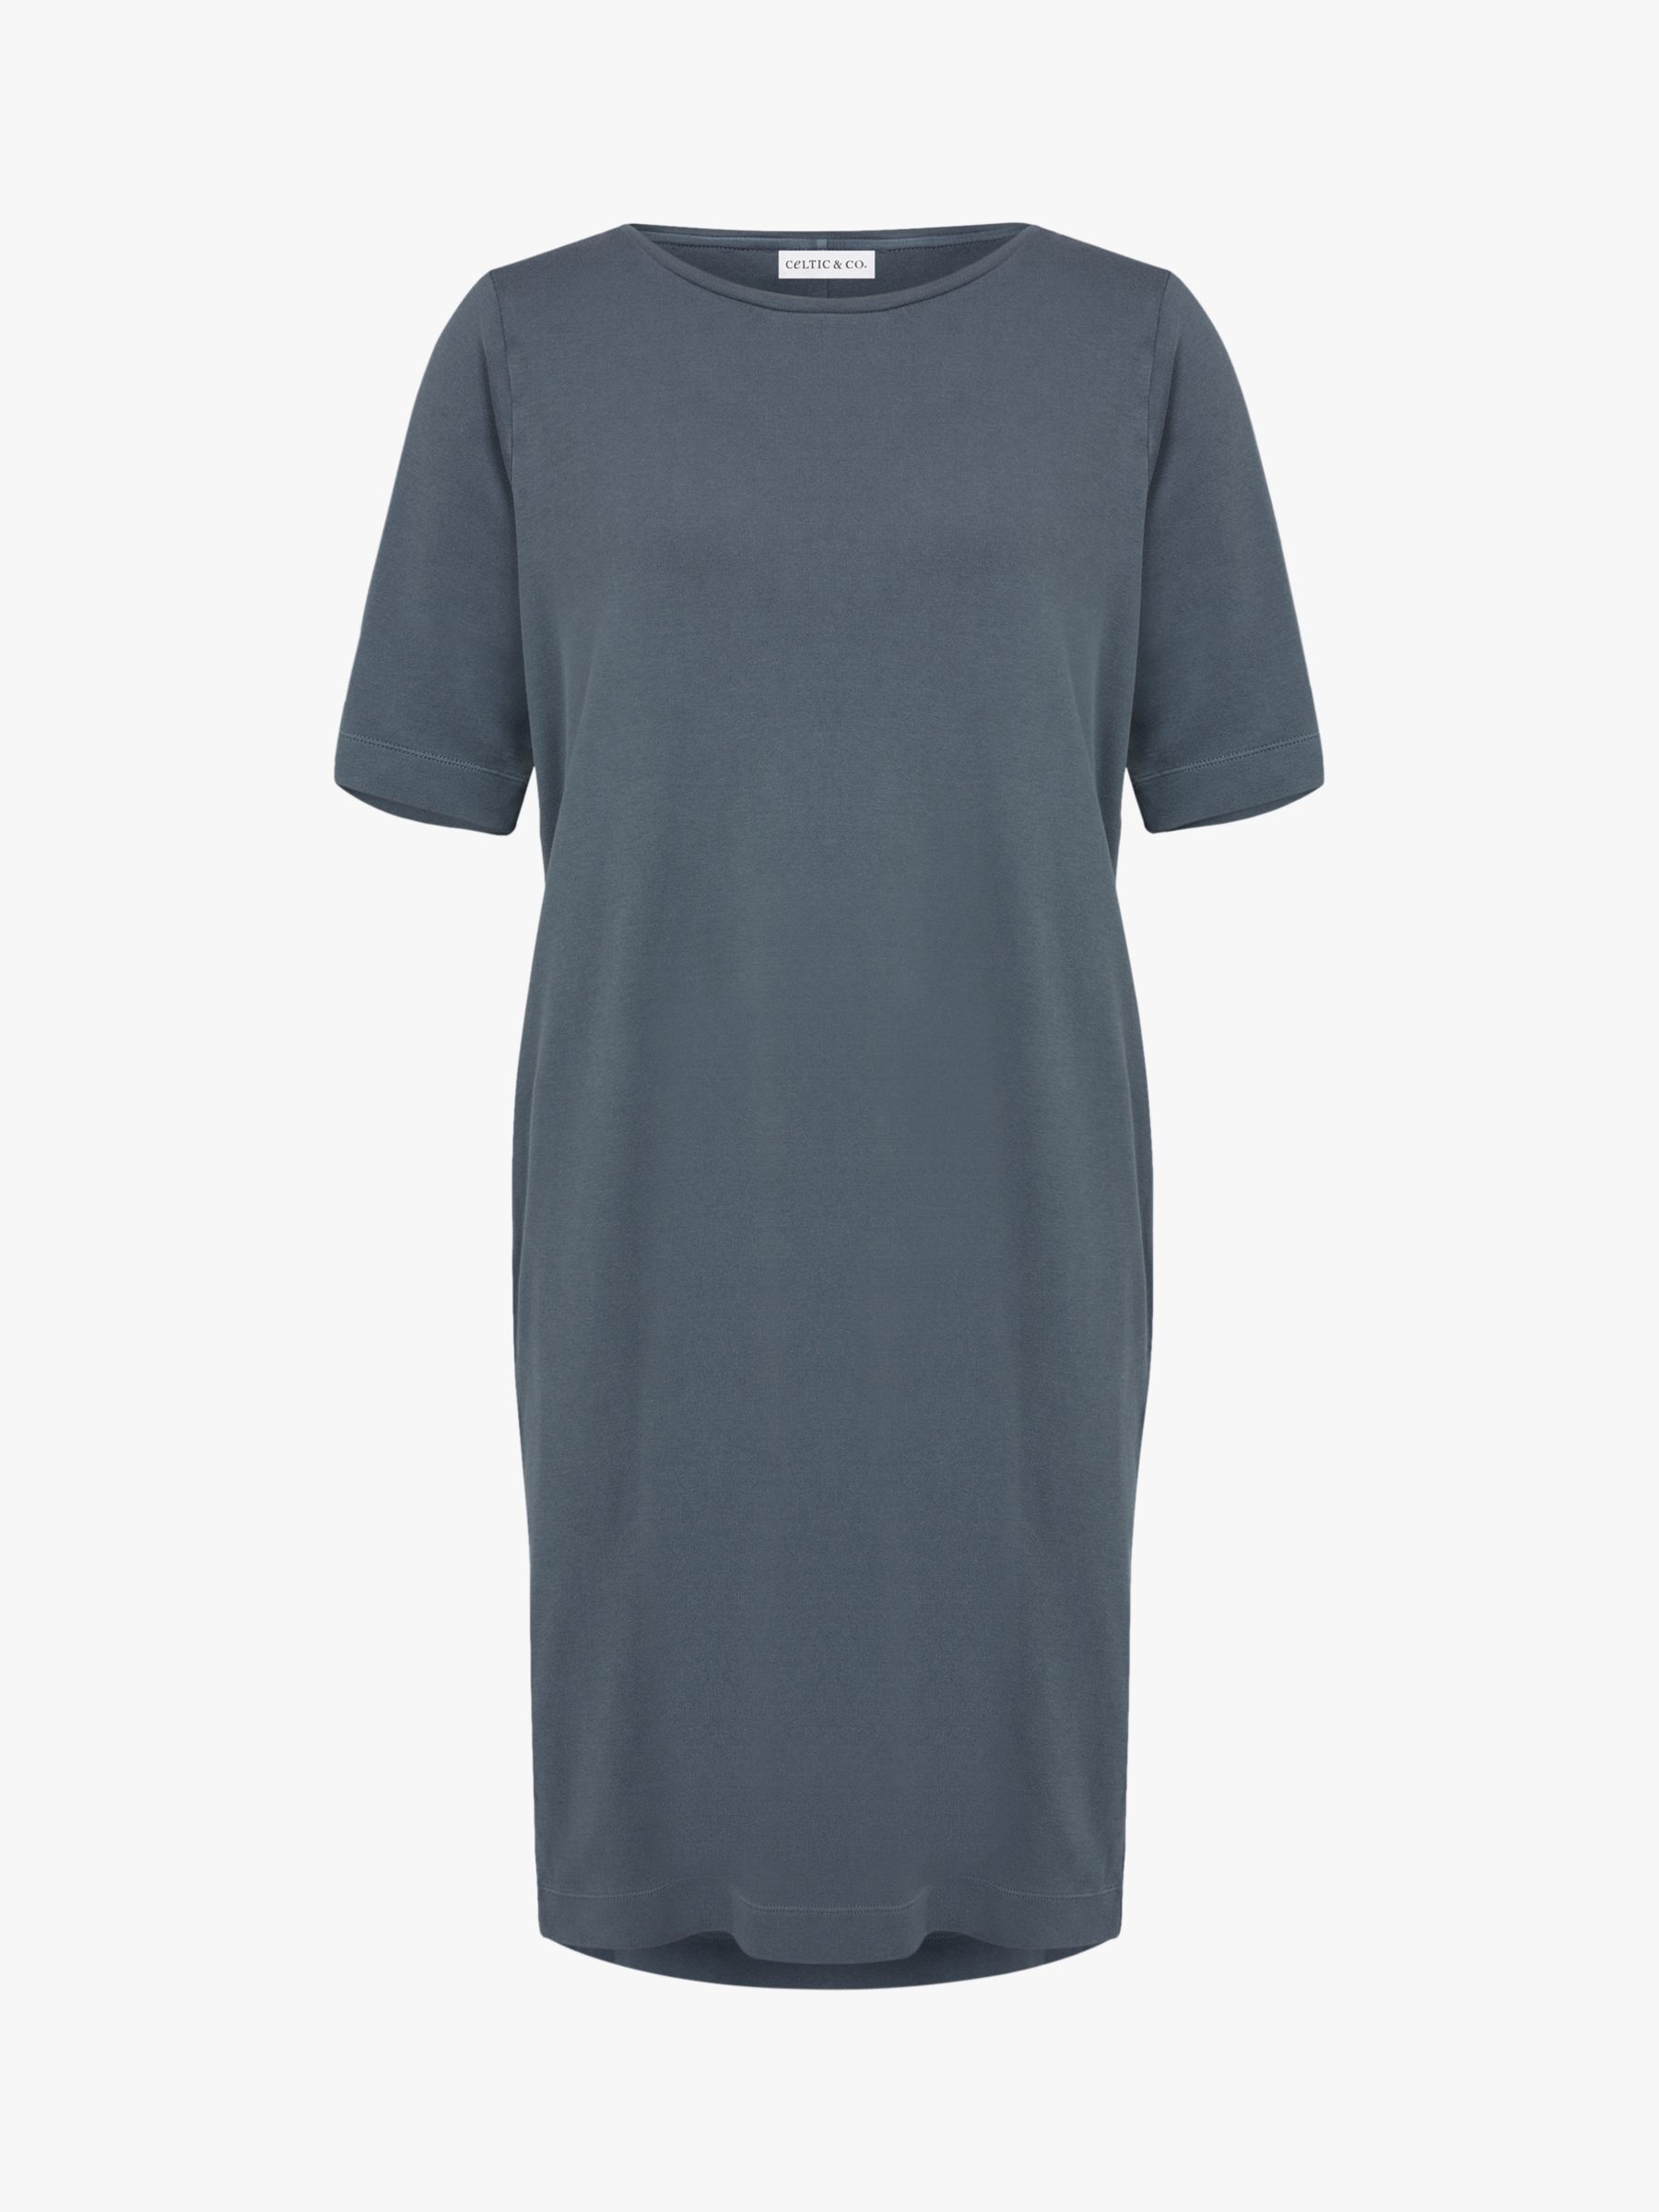 Celtic & Co. Organic Cotton T-Shirt Dress, Derby Grey at John Lewis ...